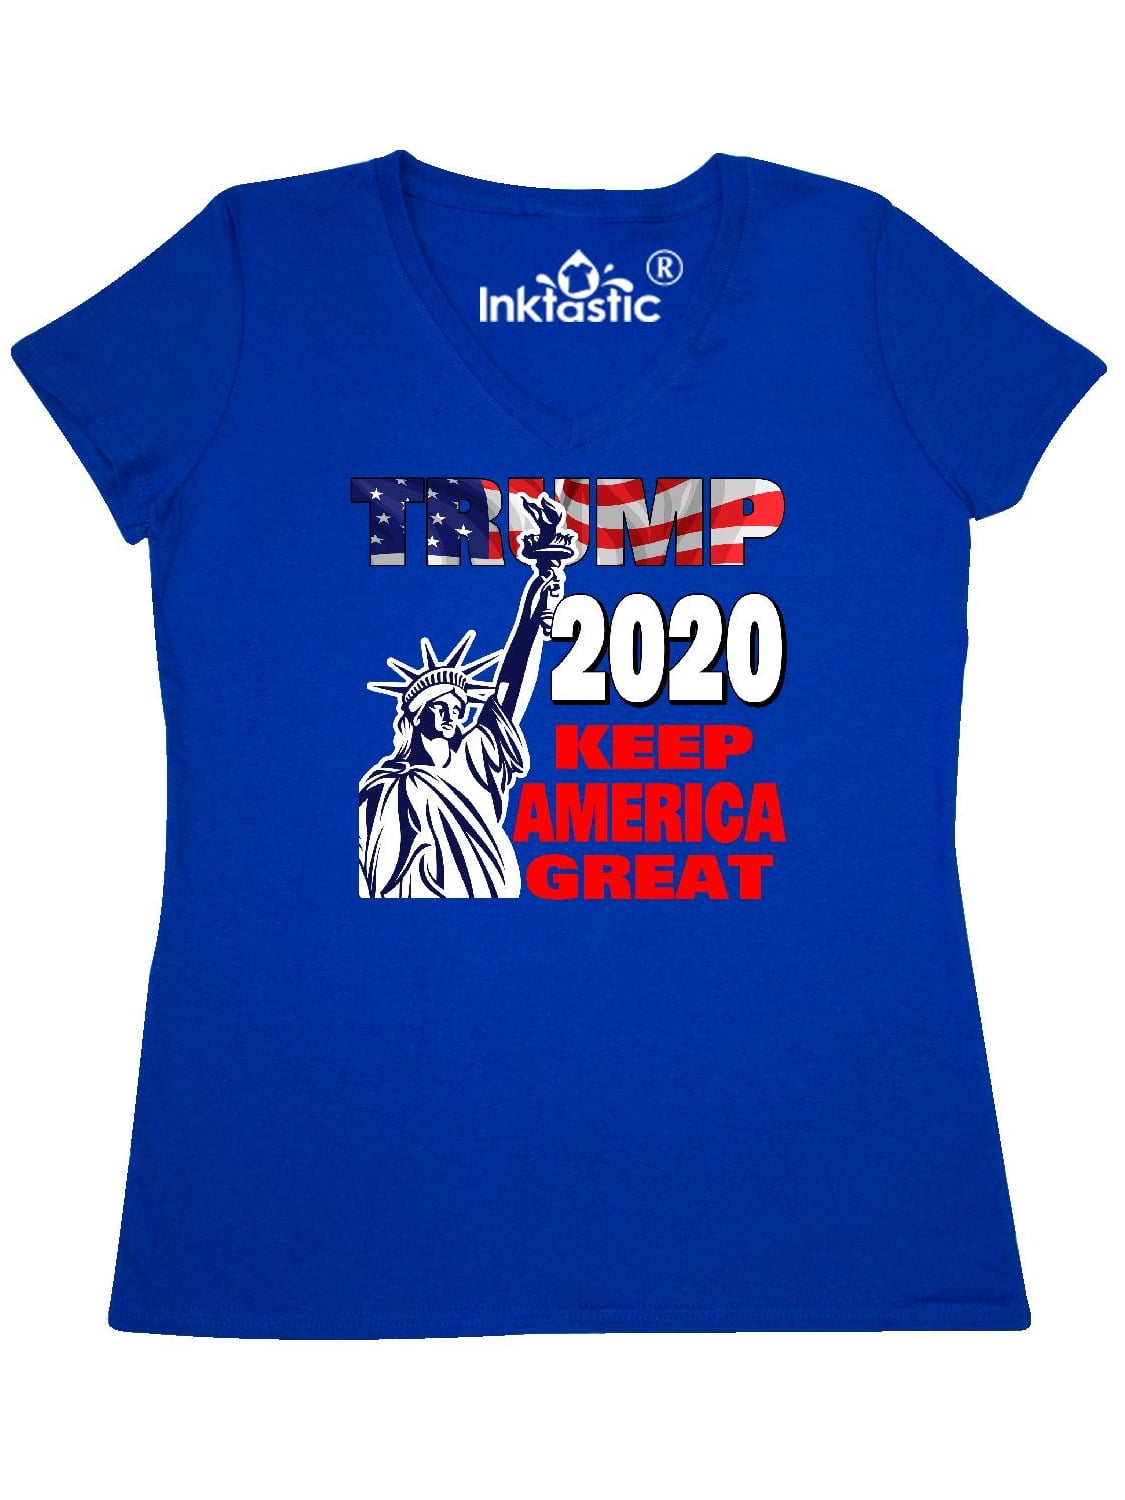 Ladies V-neck Trump 2020 T-shirt Donald Trump President Pro Make America Great